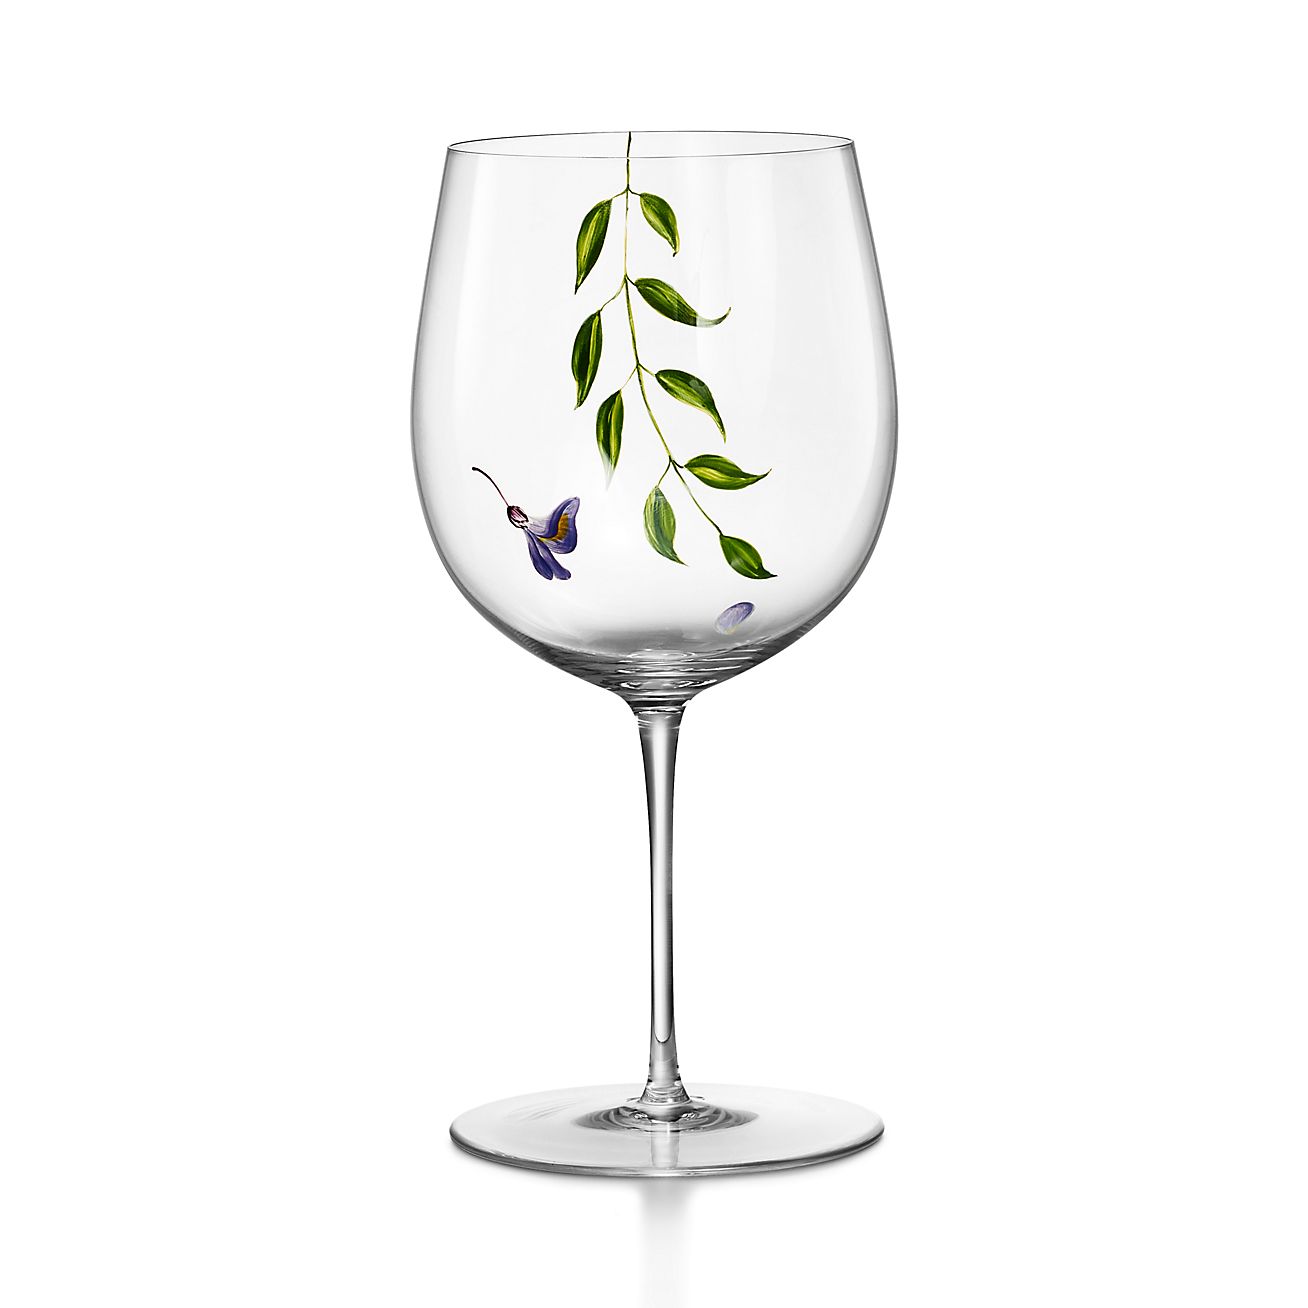 https://media.tiffany.com/is/image/Tiffany/EcomItemL2/tiffany-wisteriared-wine-glass-71475689_1050064_ED.jpg